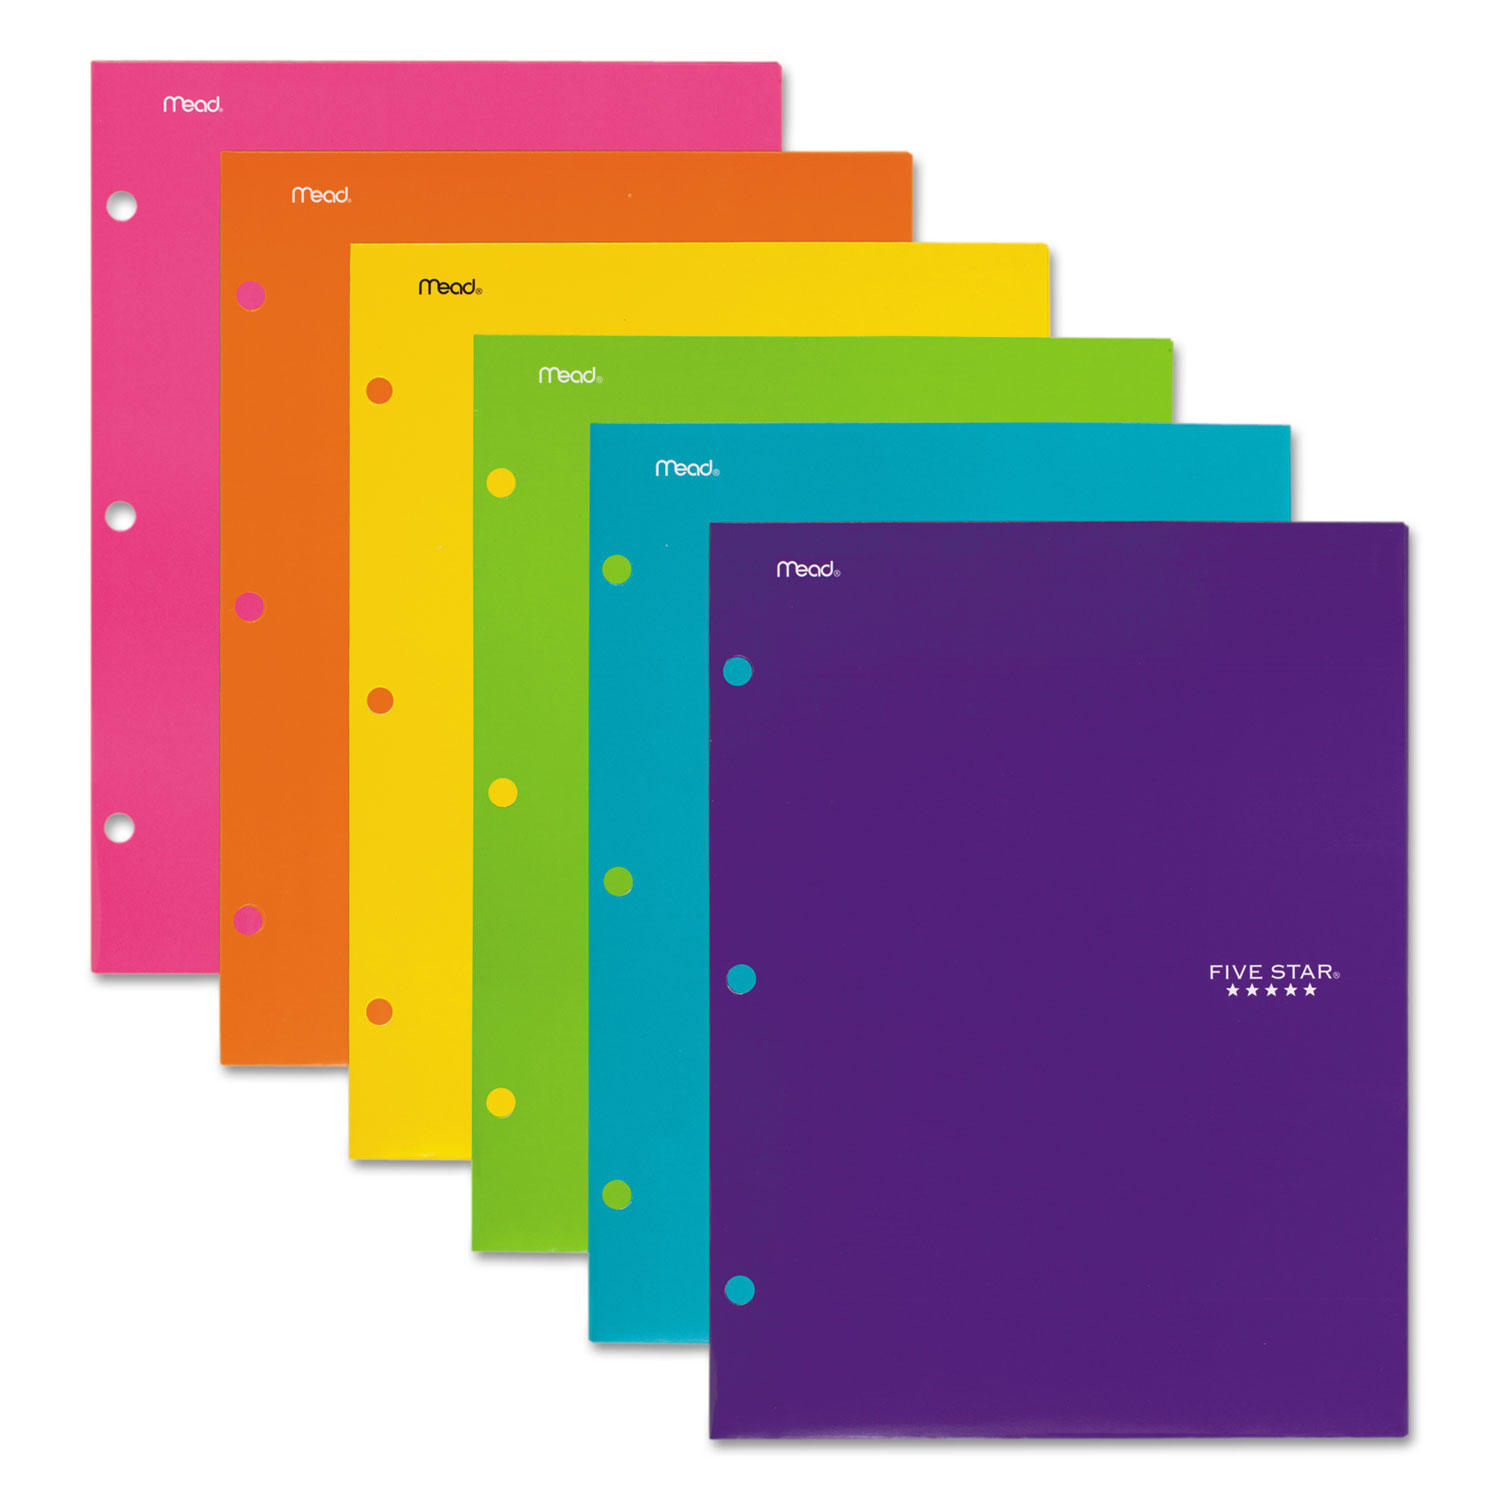  Five Star 38056 Four-Pocket Portfolio, 8 1/2 x 11, Assorted Colors, Trend Design, 6/Pack (MEA38056) 